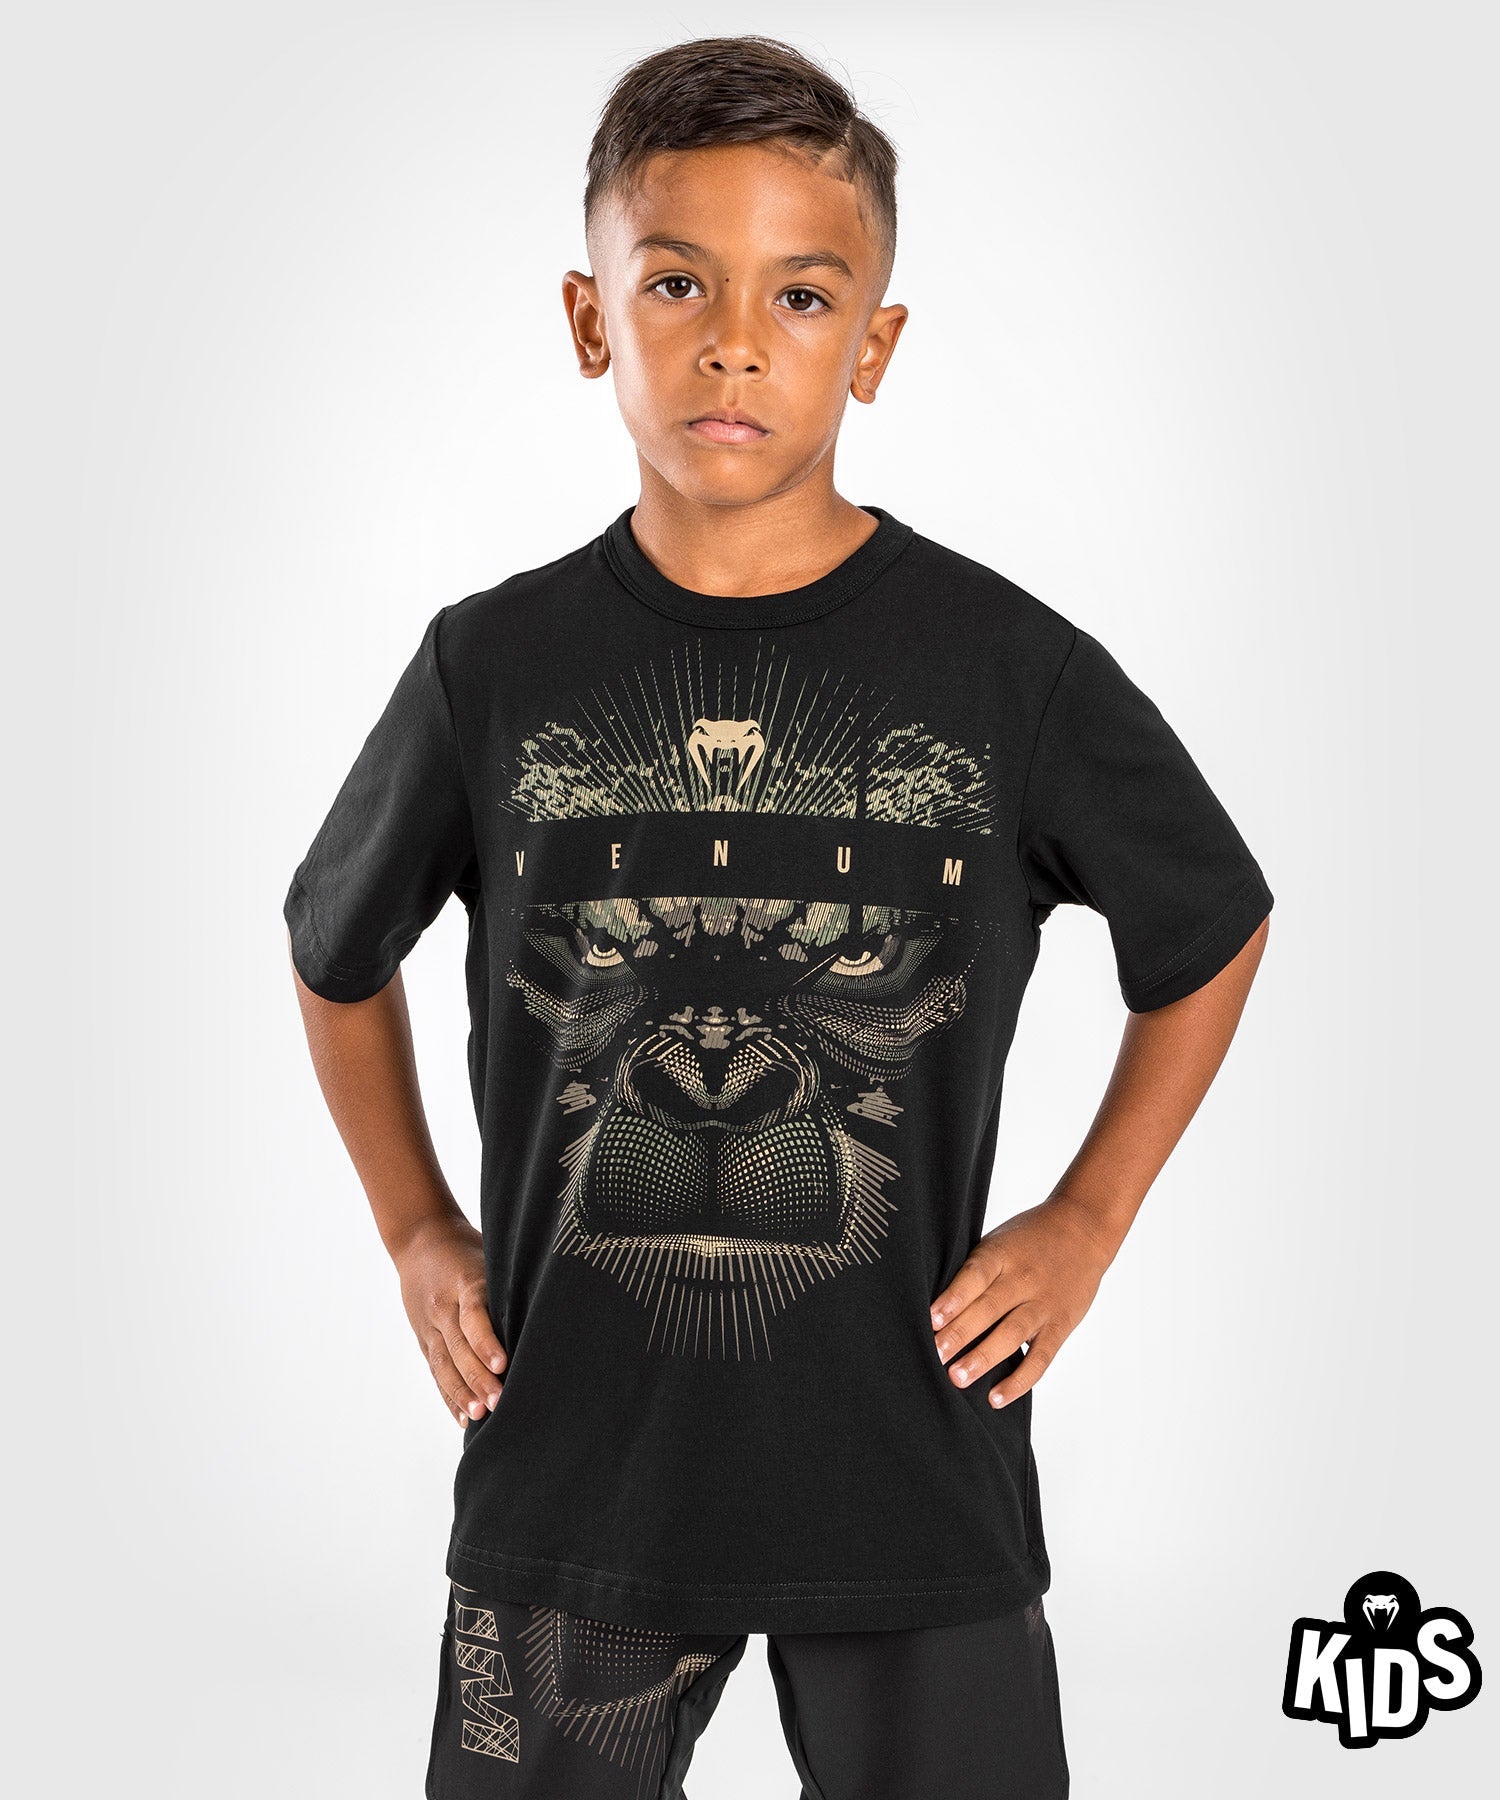 Venum Gorilla Jungle T-Shirt for Kids - Black/Sand - Venum Asia